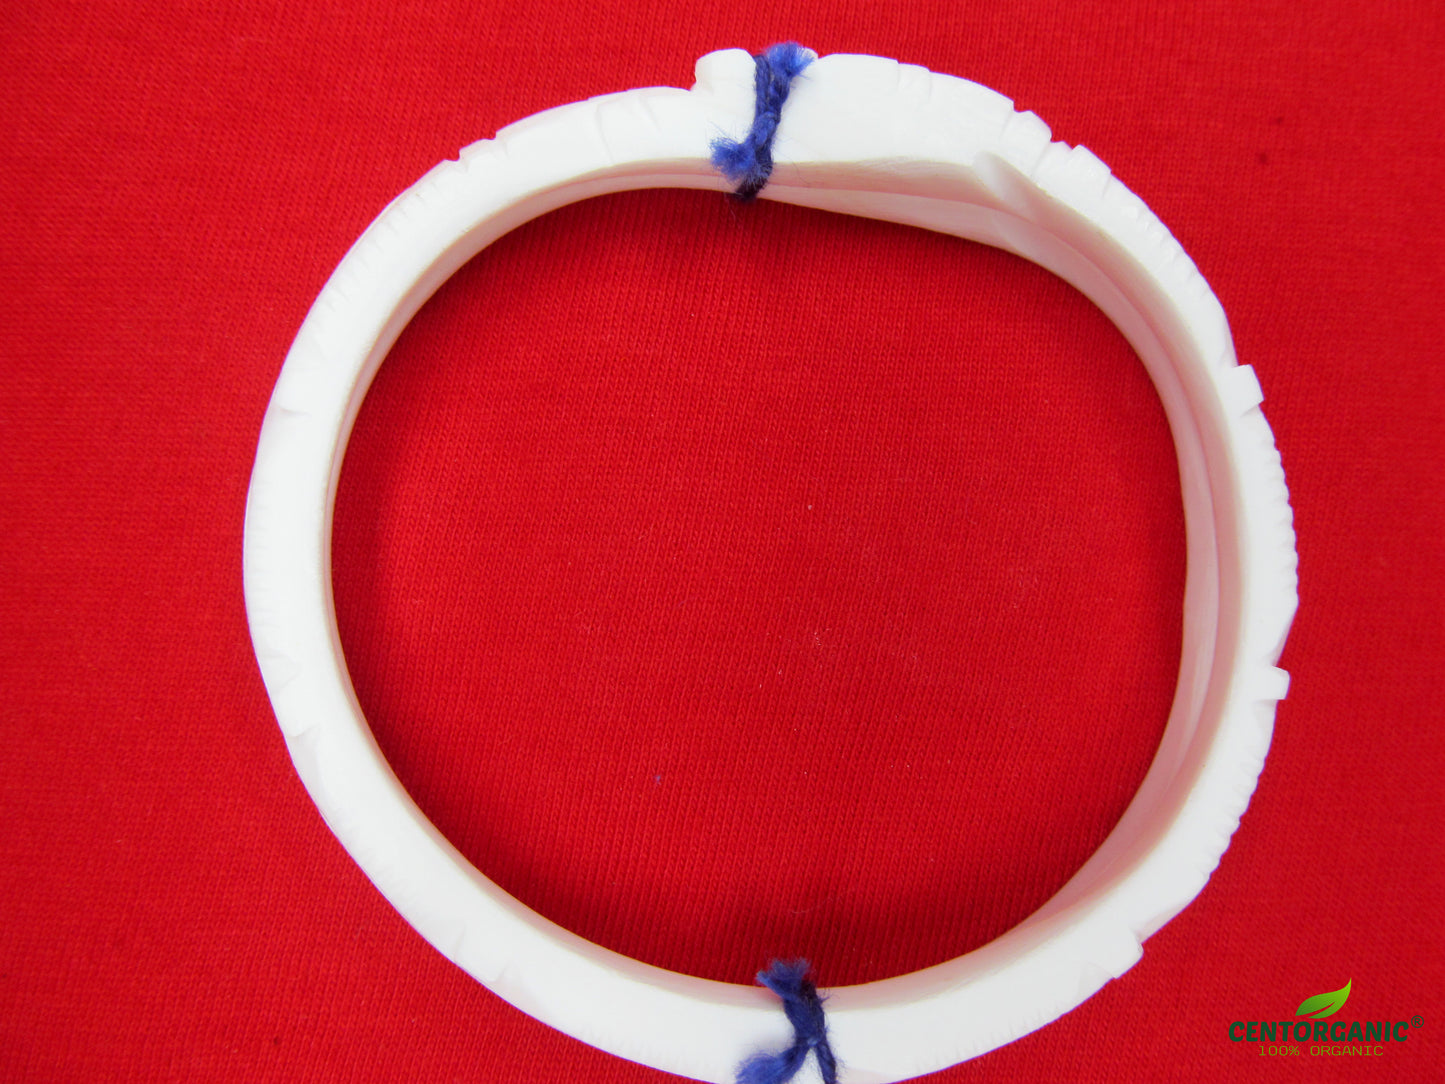 Centorganic bracelet sankha pola bangles for women, 1 pair of narrow sankha, 1 pair of red pola, 1 Sabitri noa, 1 Iron noa. (Design code: CSBM18)